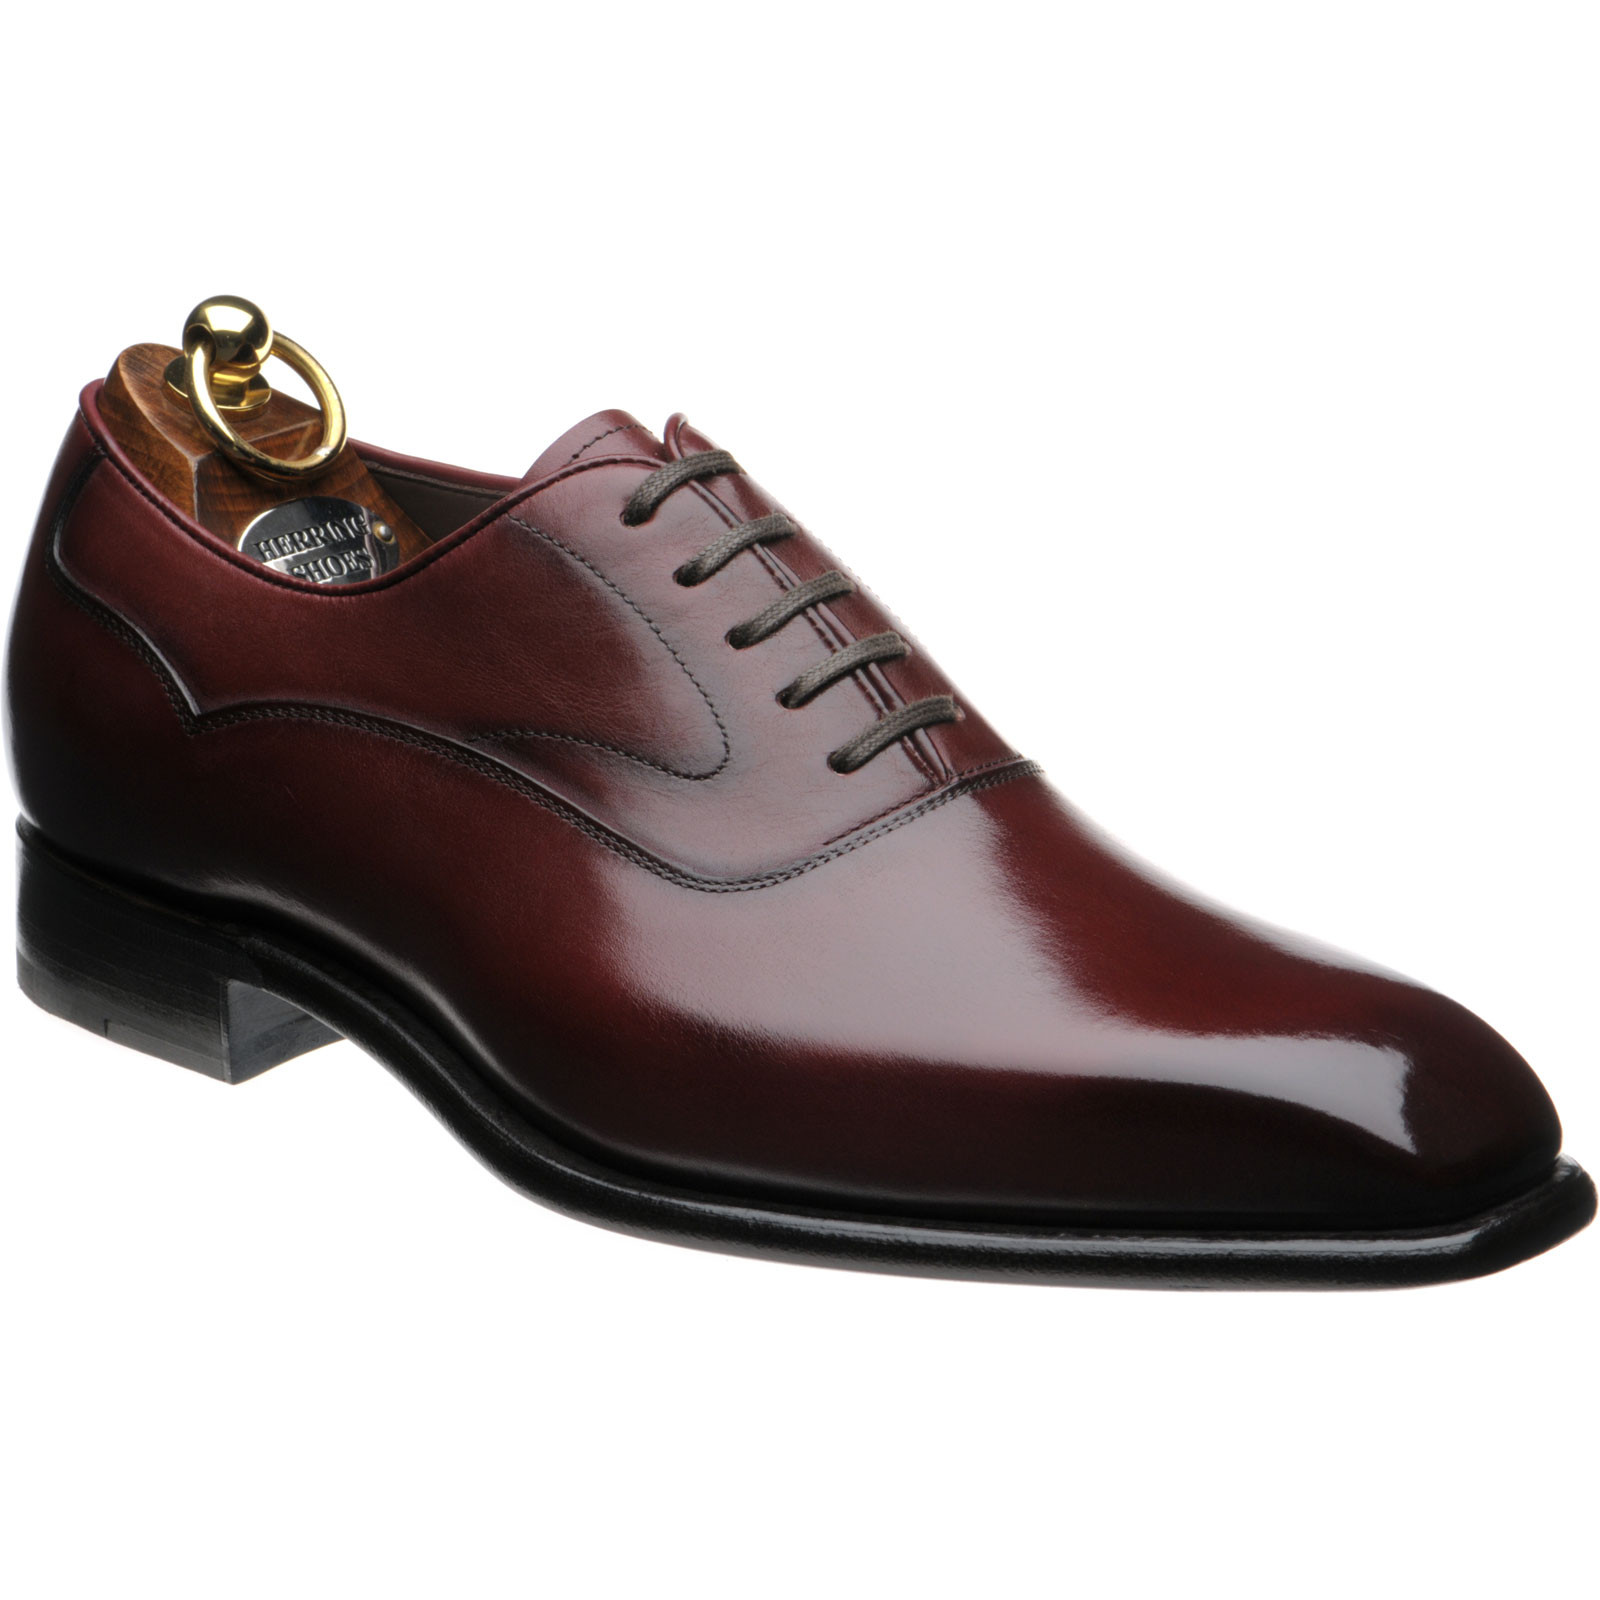 Herring shoes | Herring Premier | Markham Oxfords in Burgundy Calf at ...